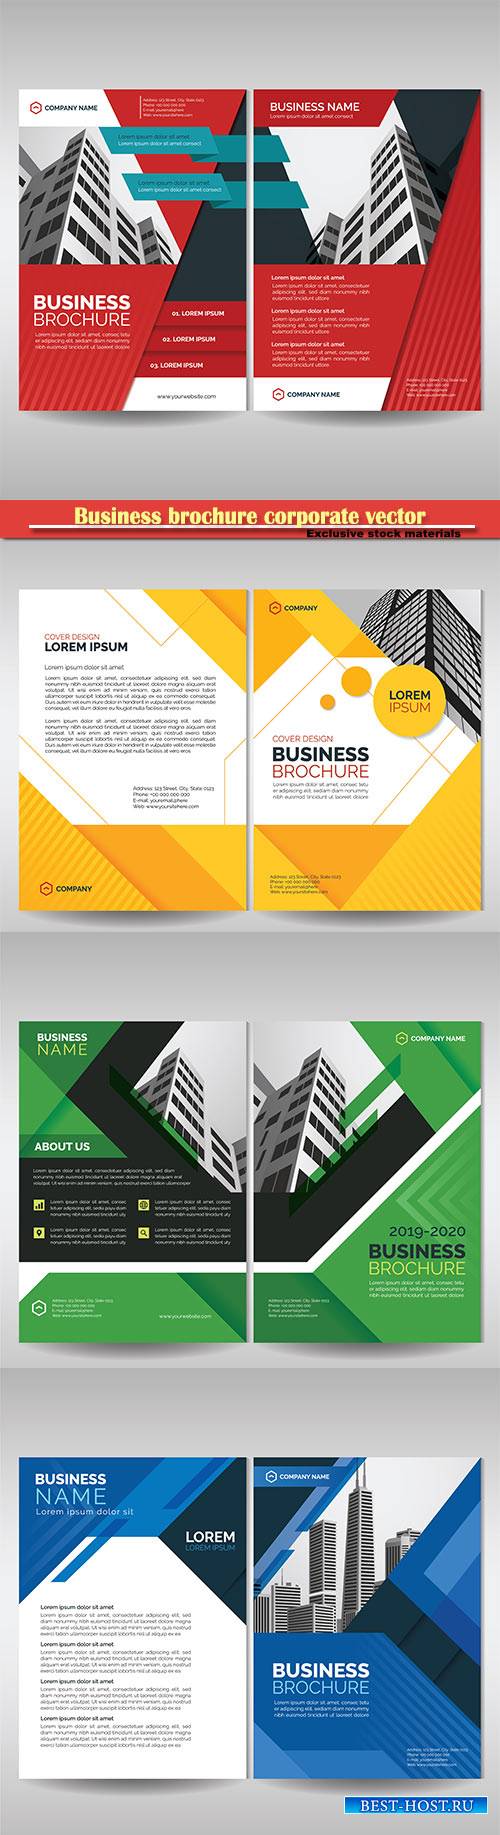 Business brochure corporate vector template, magazine flyer mockup # 37